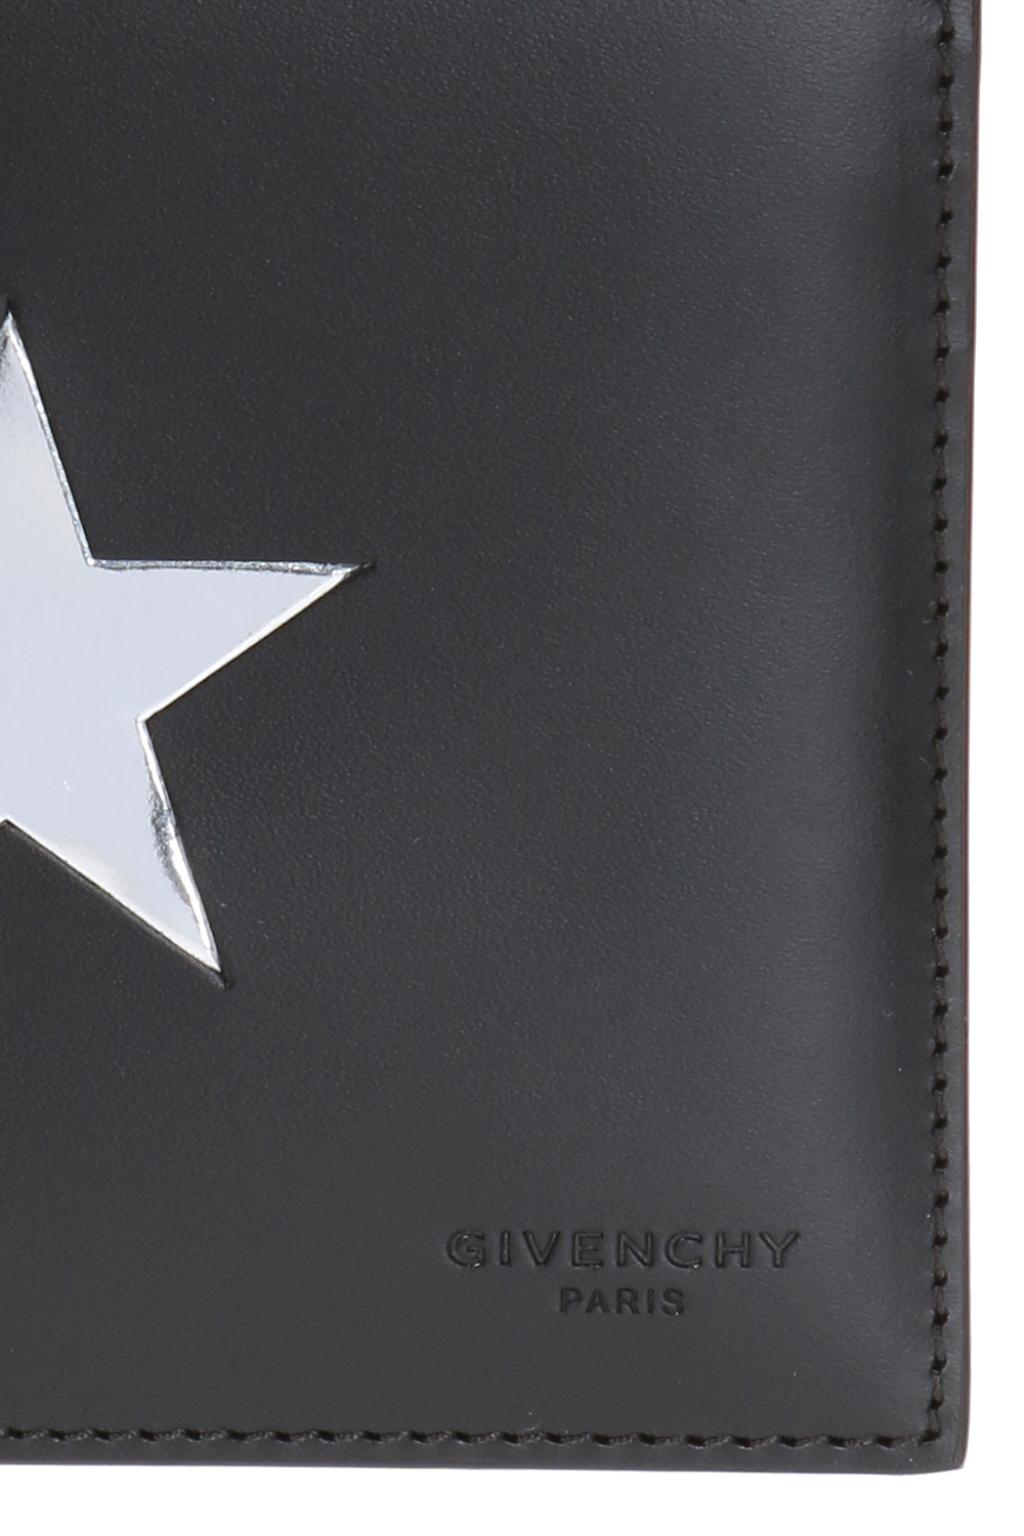 Givenchy Bi-fold wallet | Men's Accessories | Vitkac